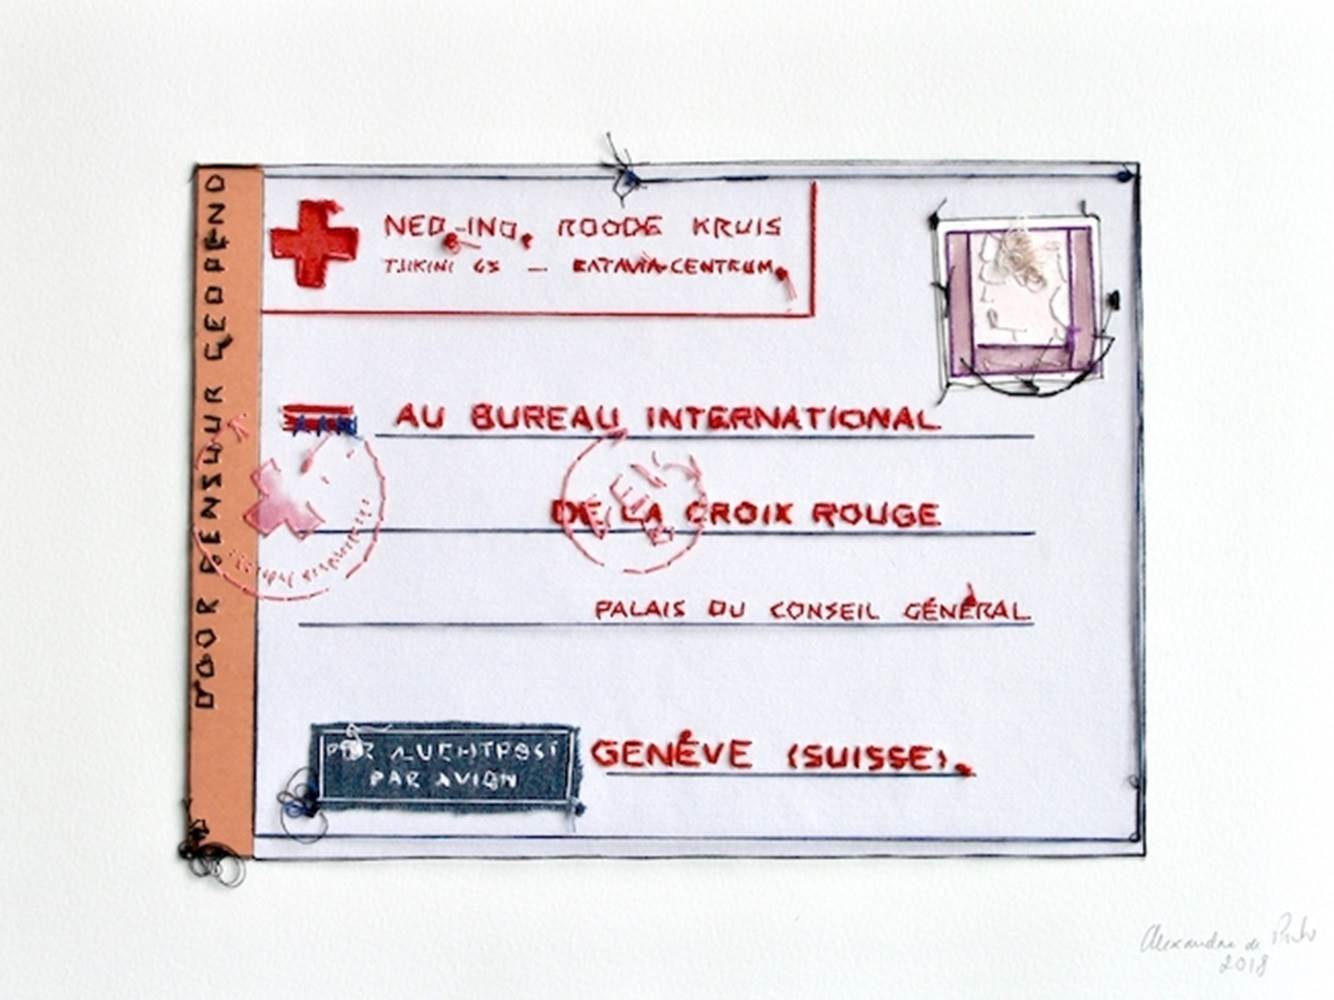 Censure de Croix Rouge, original   Drawing and Illustration by Alexandra de Pinho